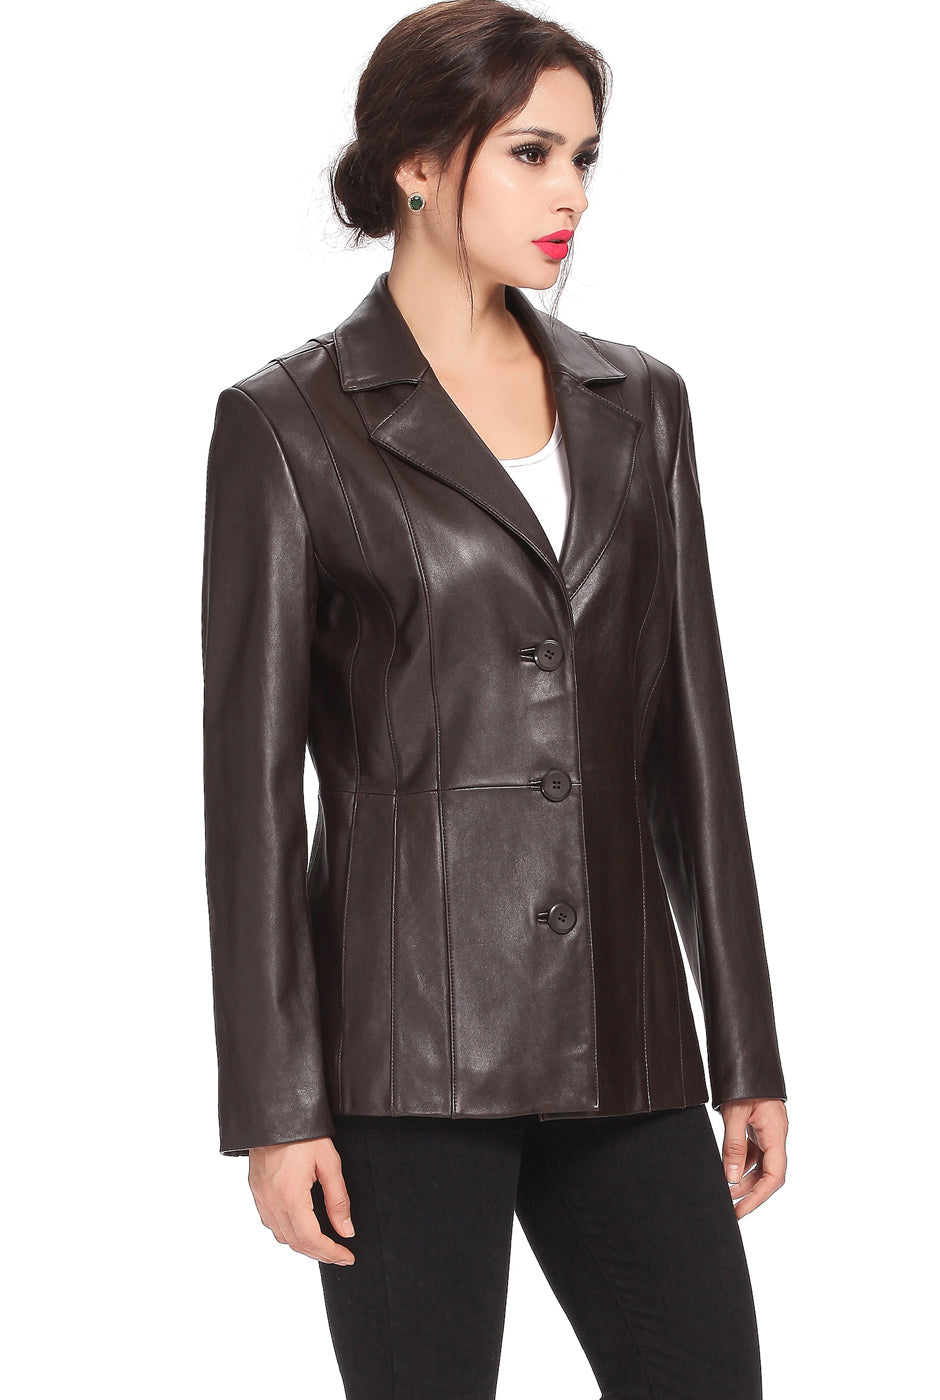 BGSD Women Crystal Three-Button Lambskin Leather Blazer